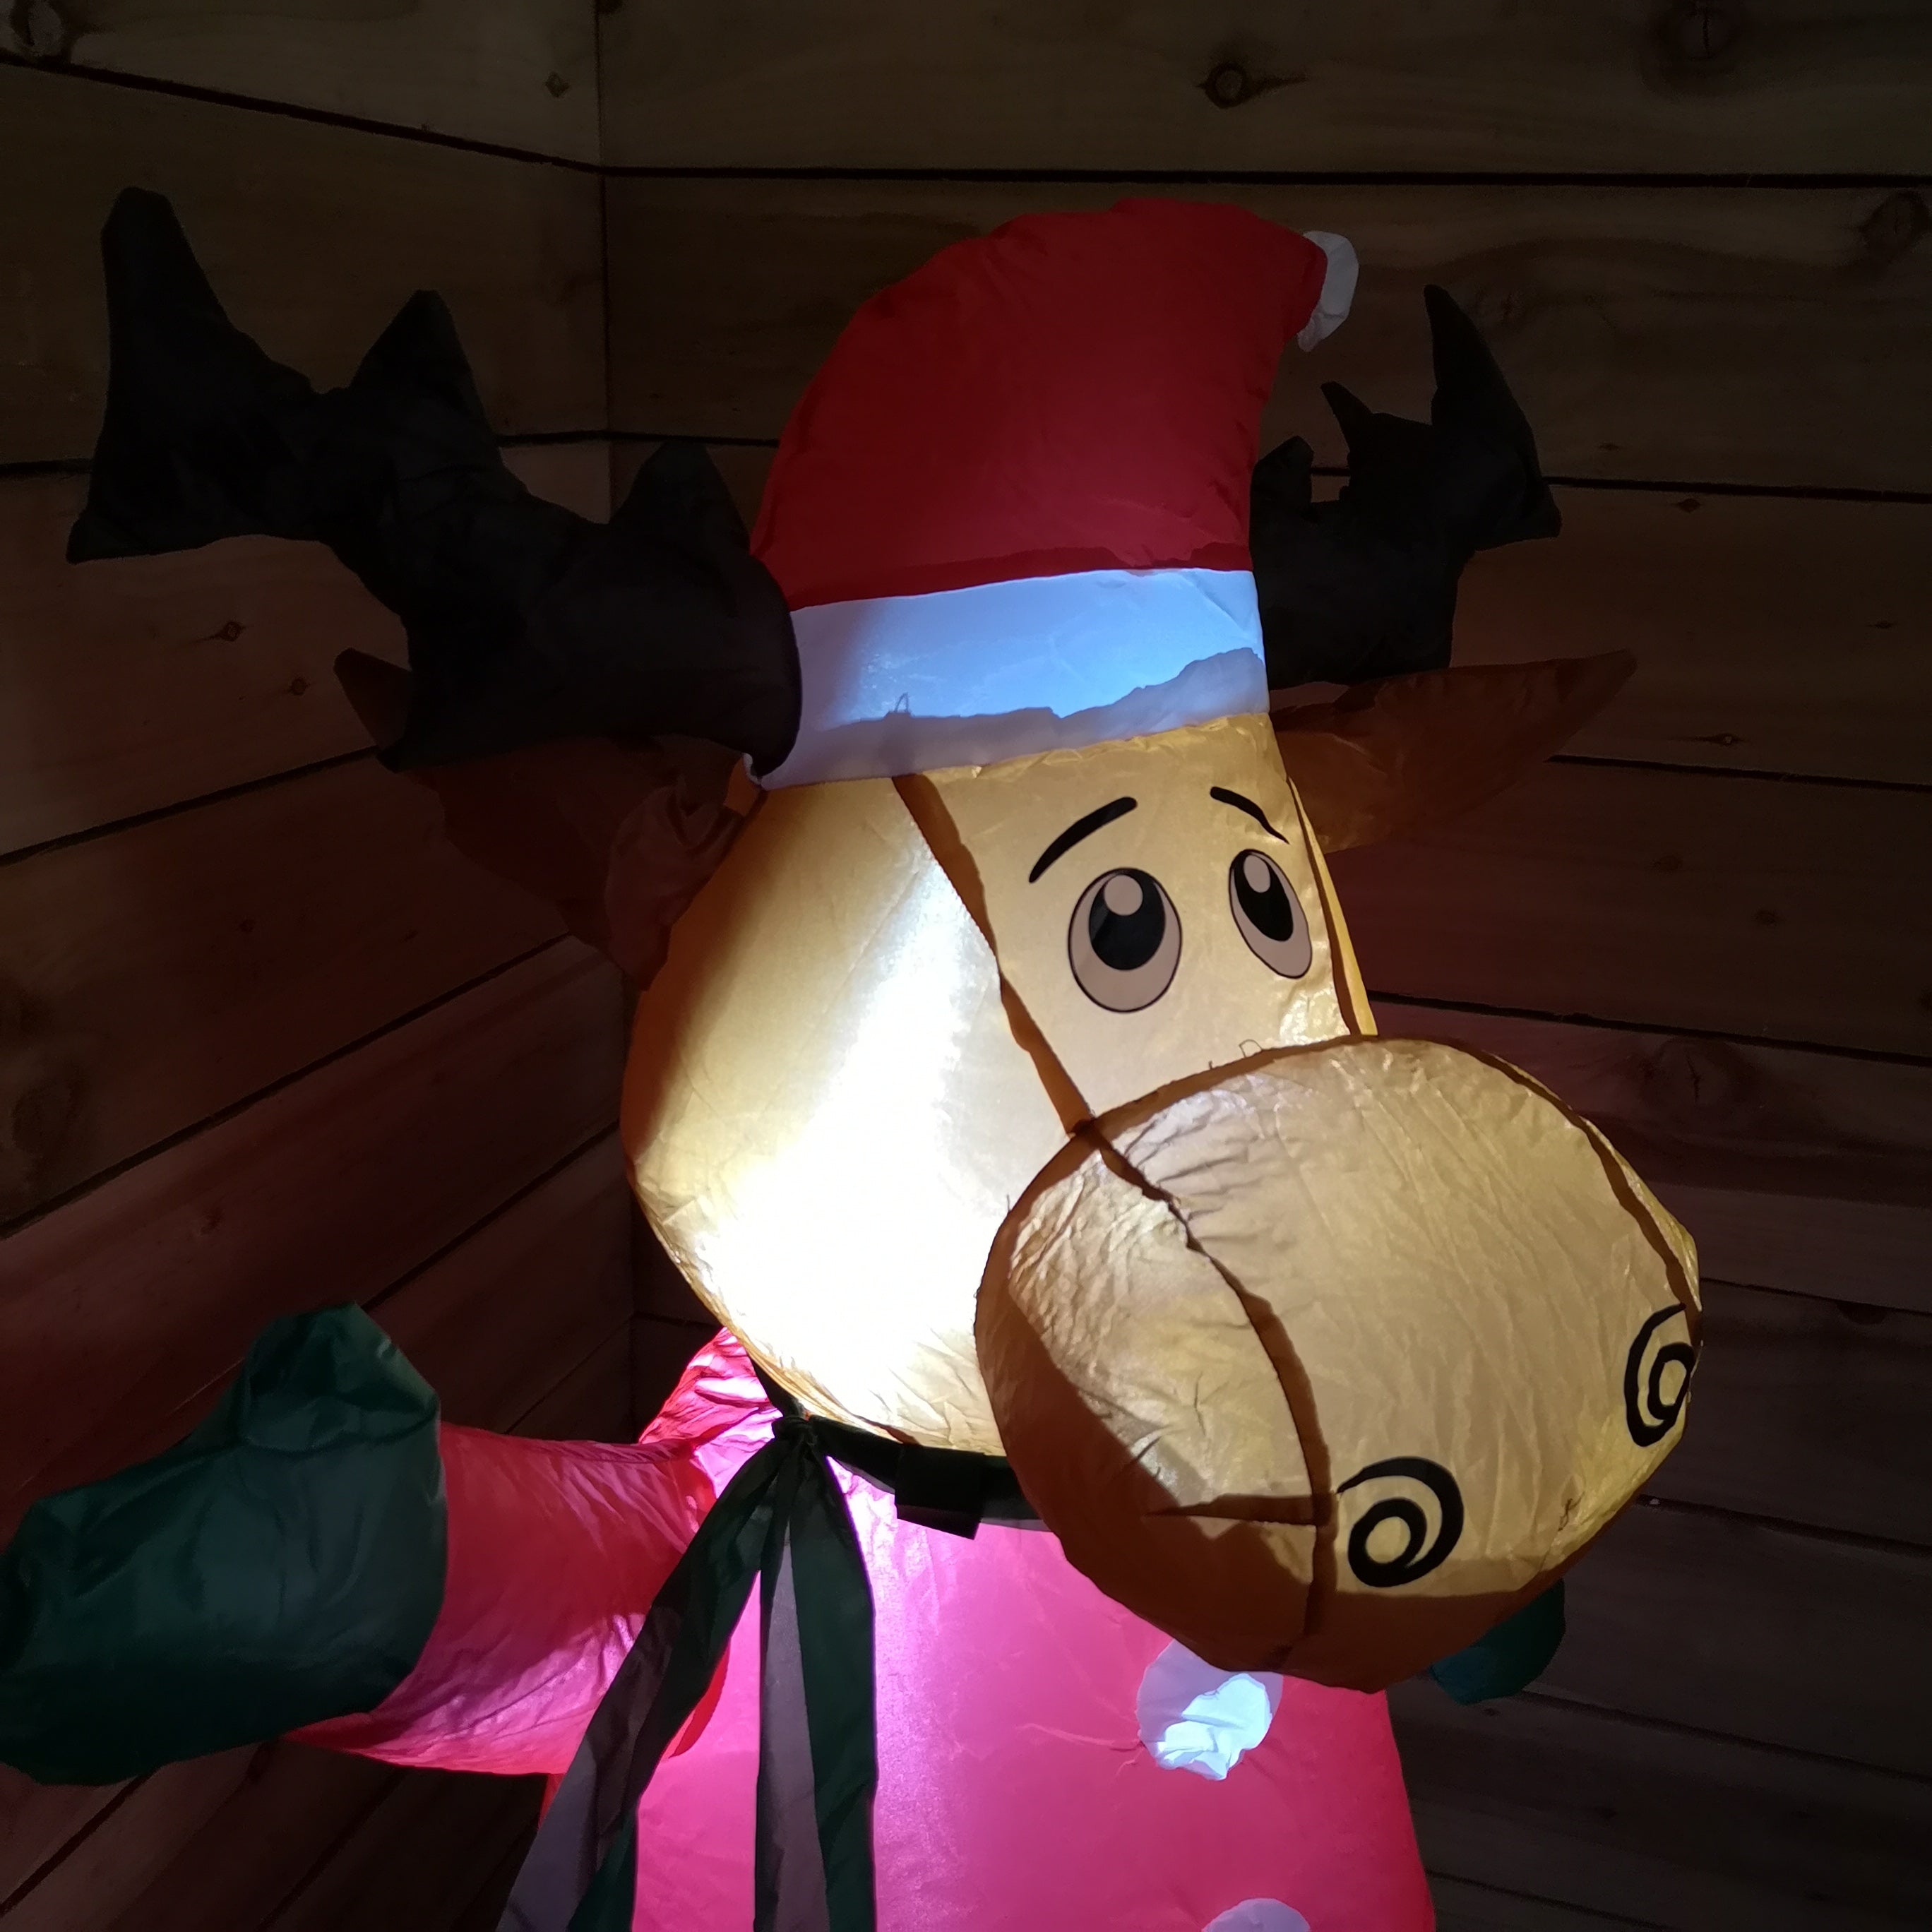 120cm Illuminated Christmas Inflatable Festive Reindeer